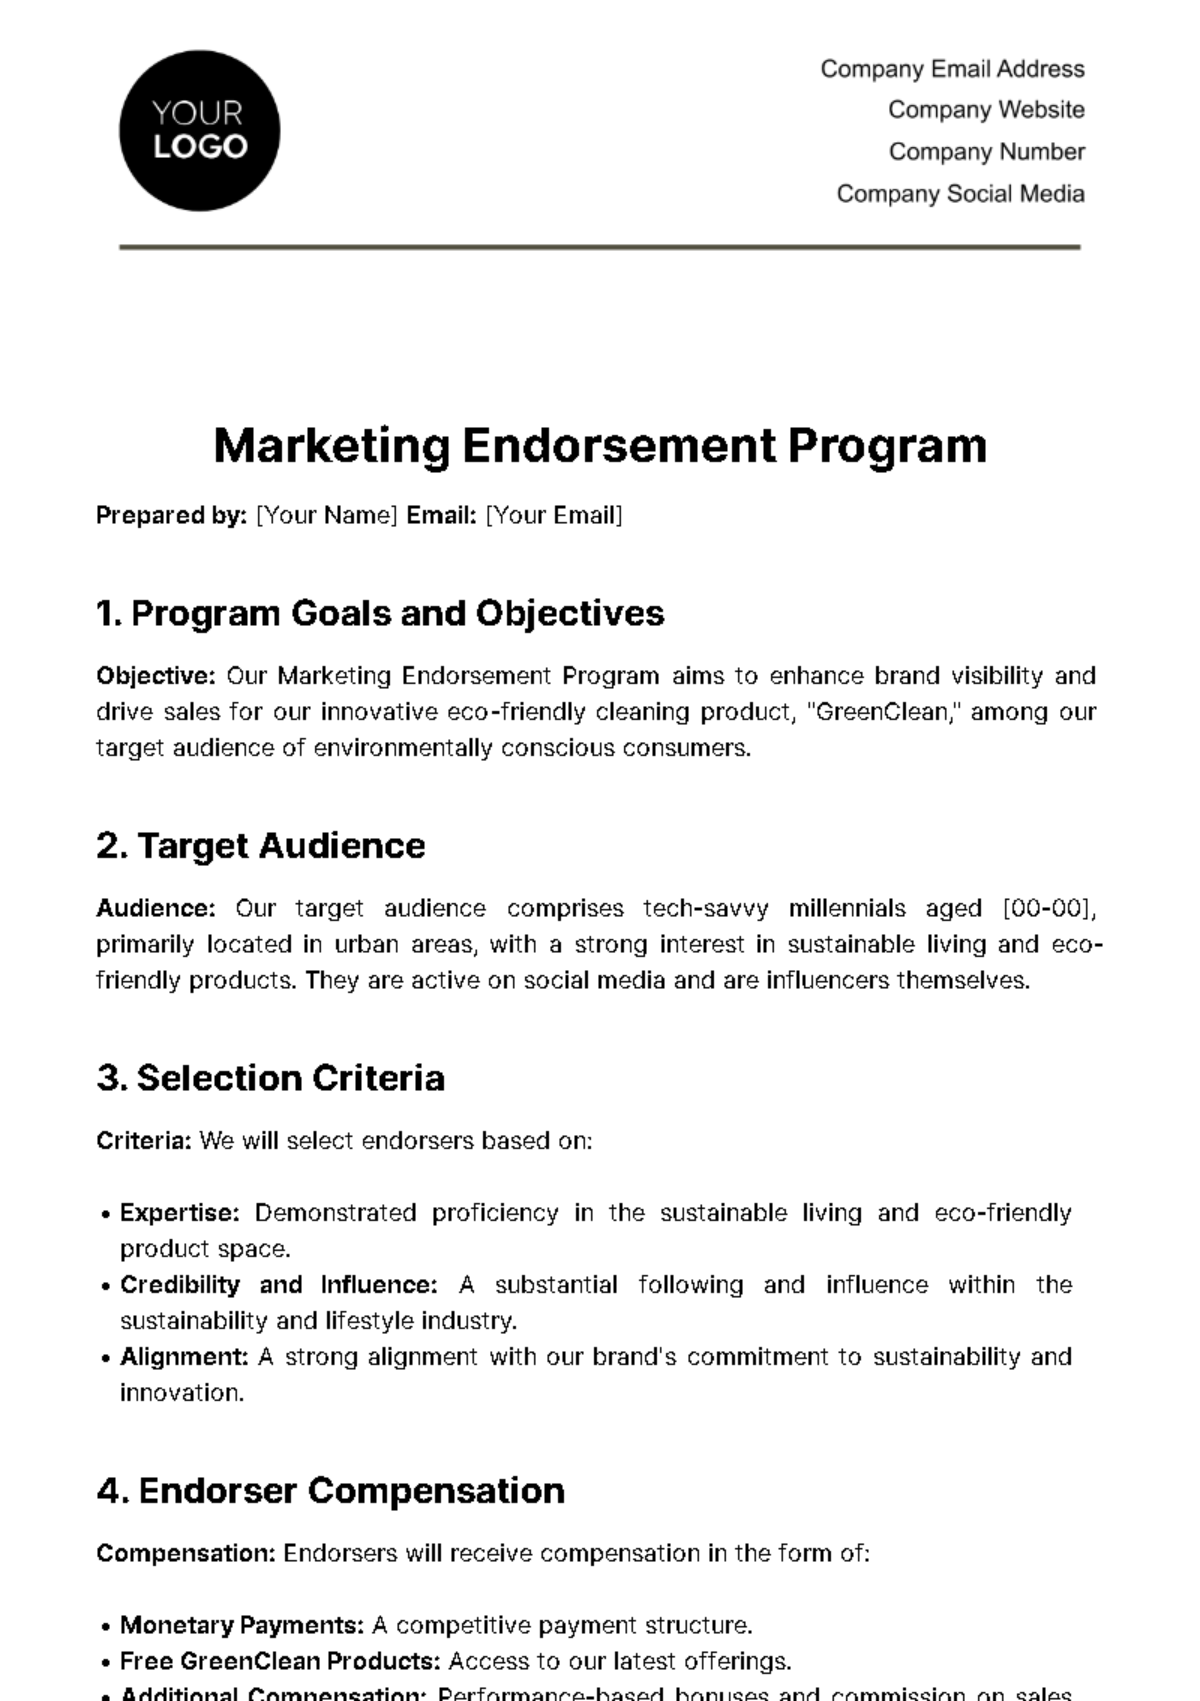 Marketing Endorsement Program Template